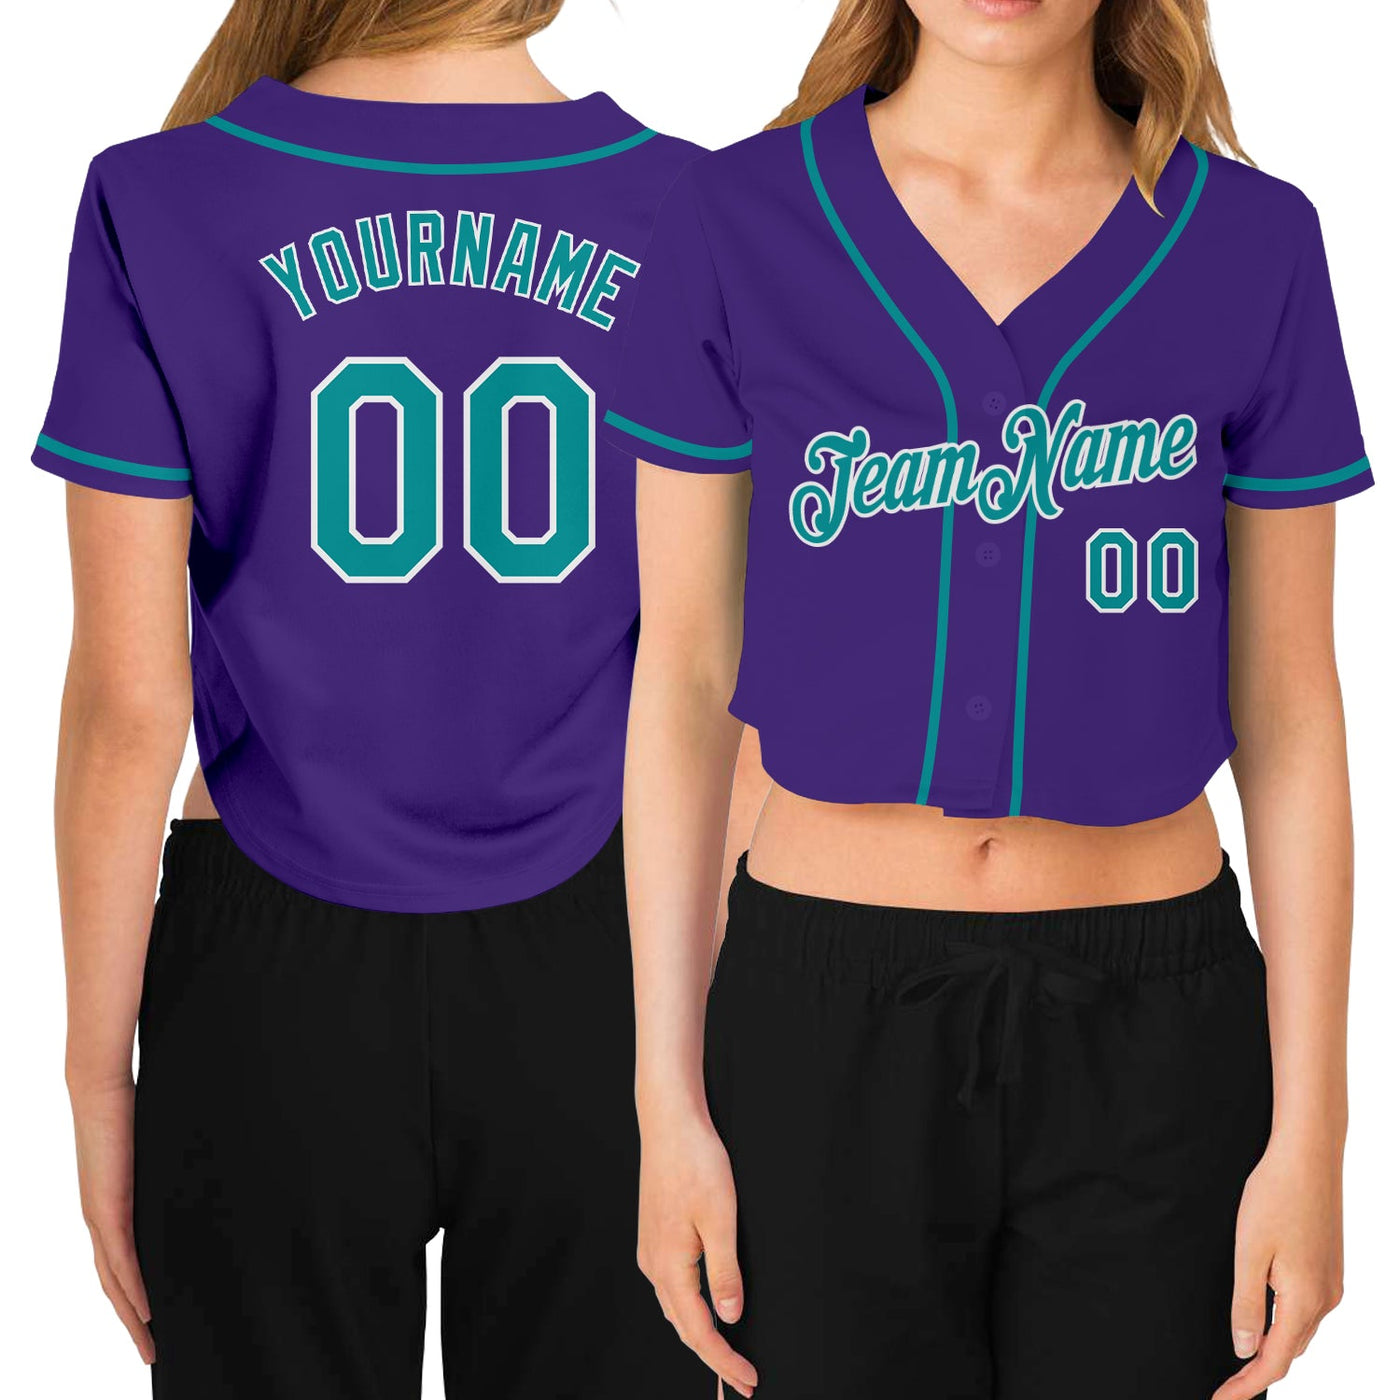 Custom Women's Purple Aqua-White V-Neck Cropped Baseball Jersey - Owls Matrix LTD